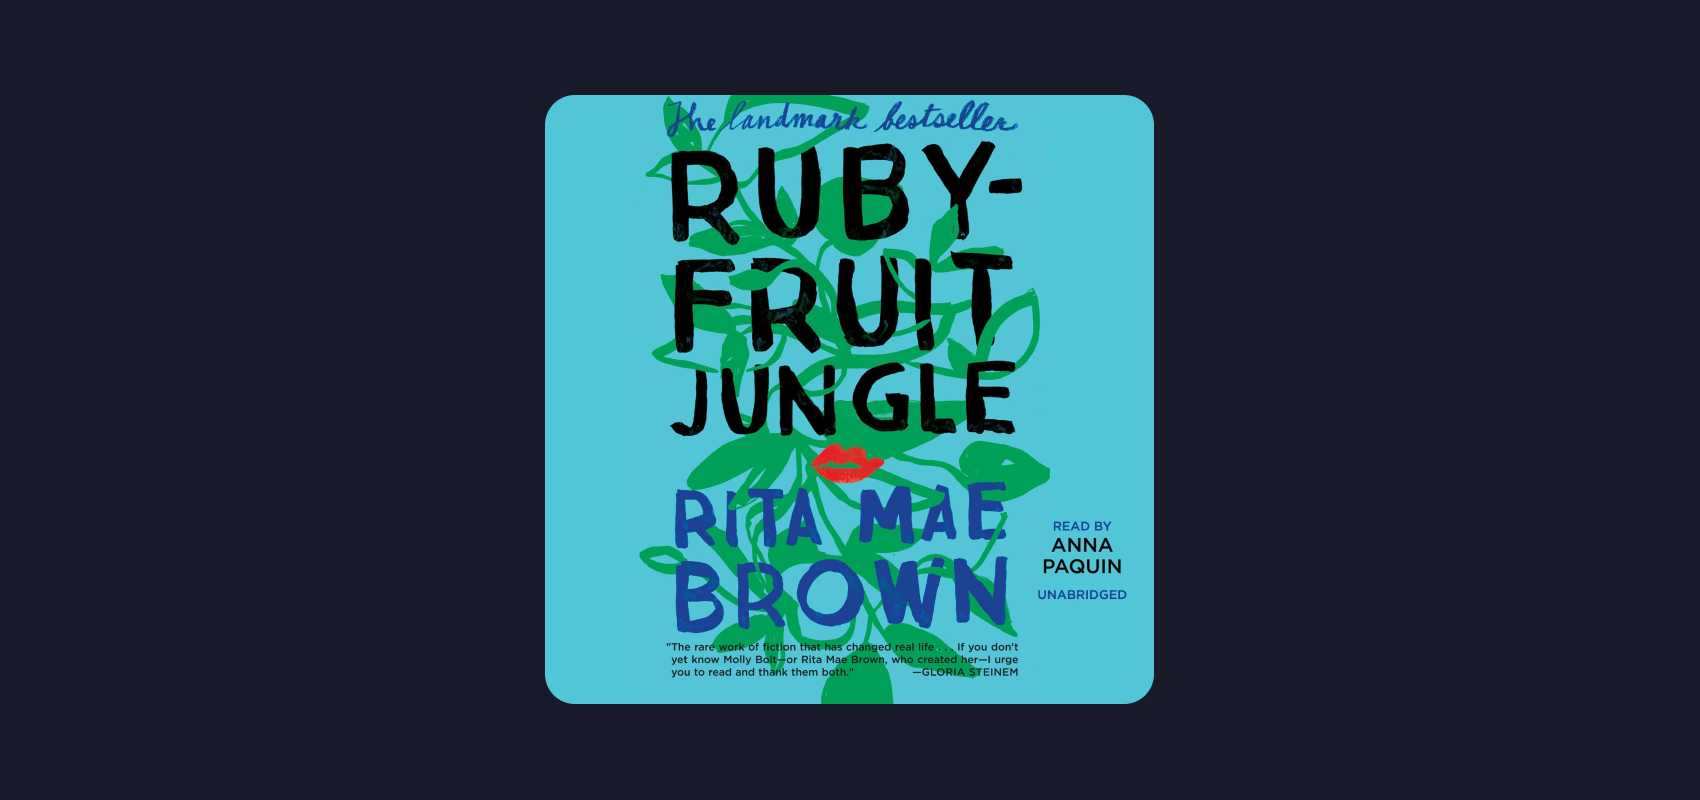 Rubyfruit Jungle cover